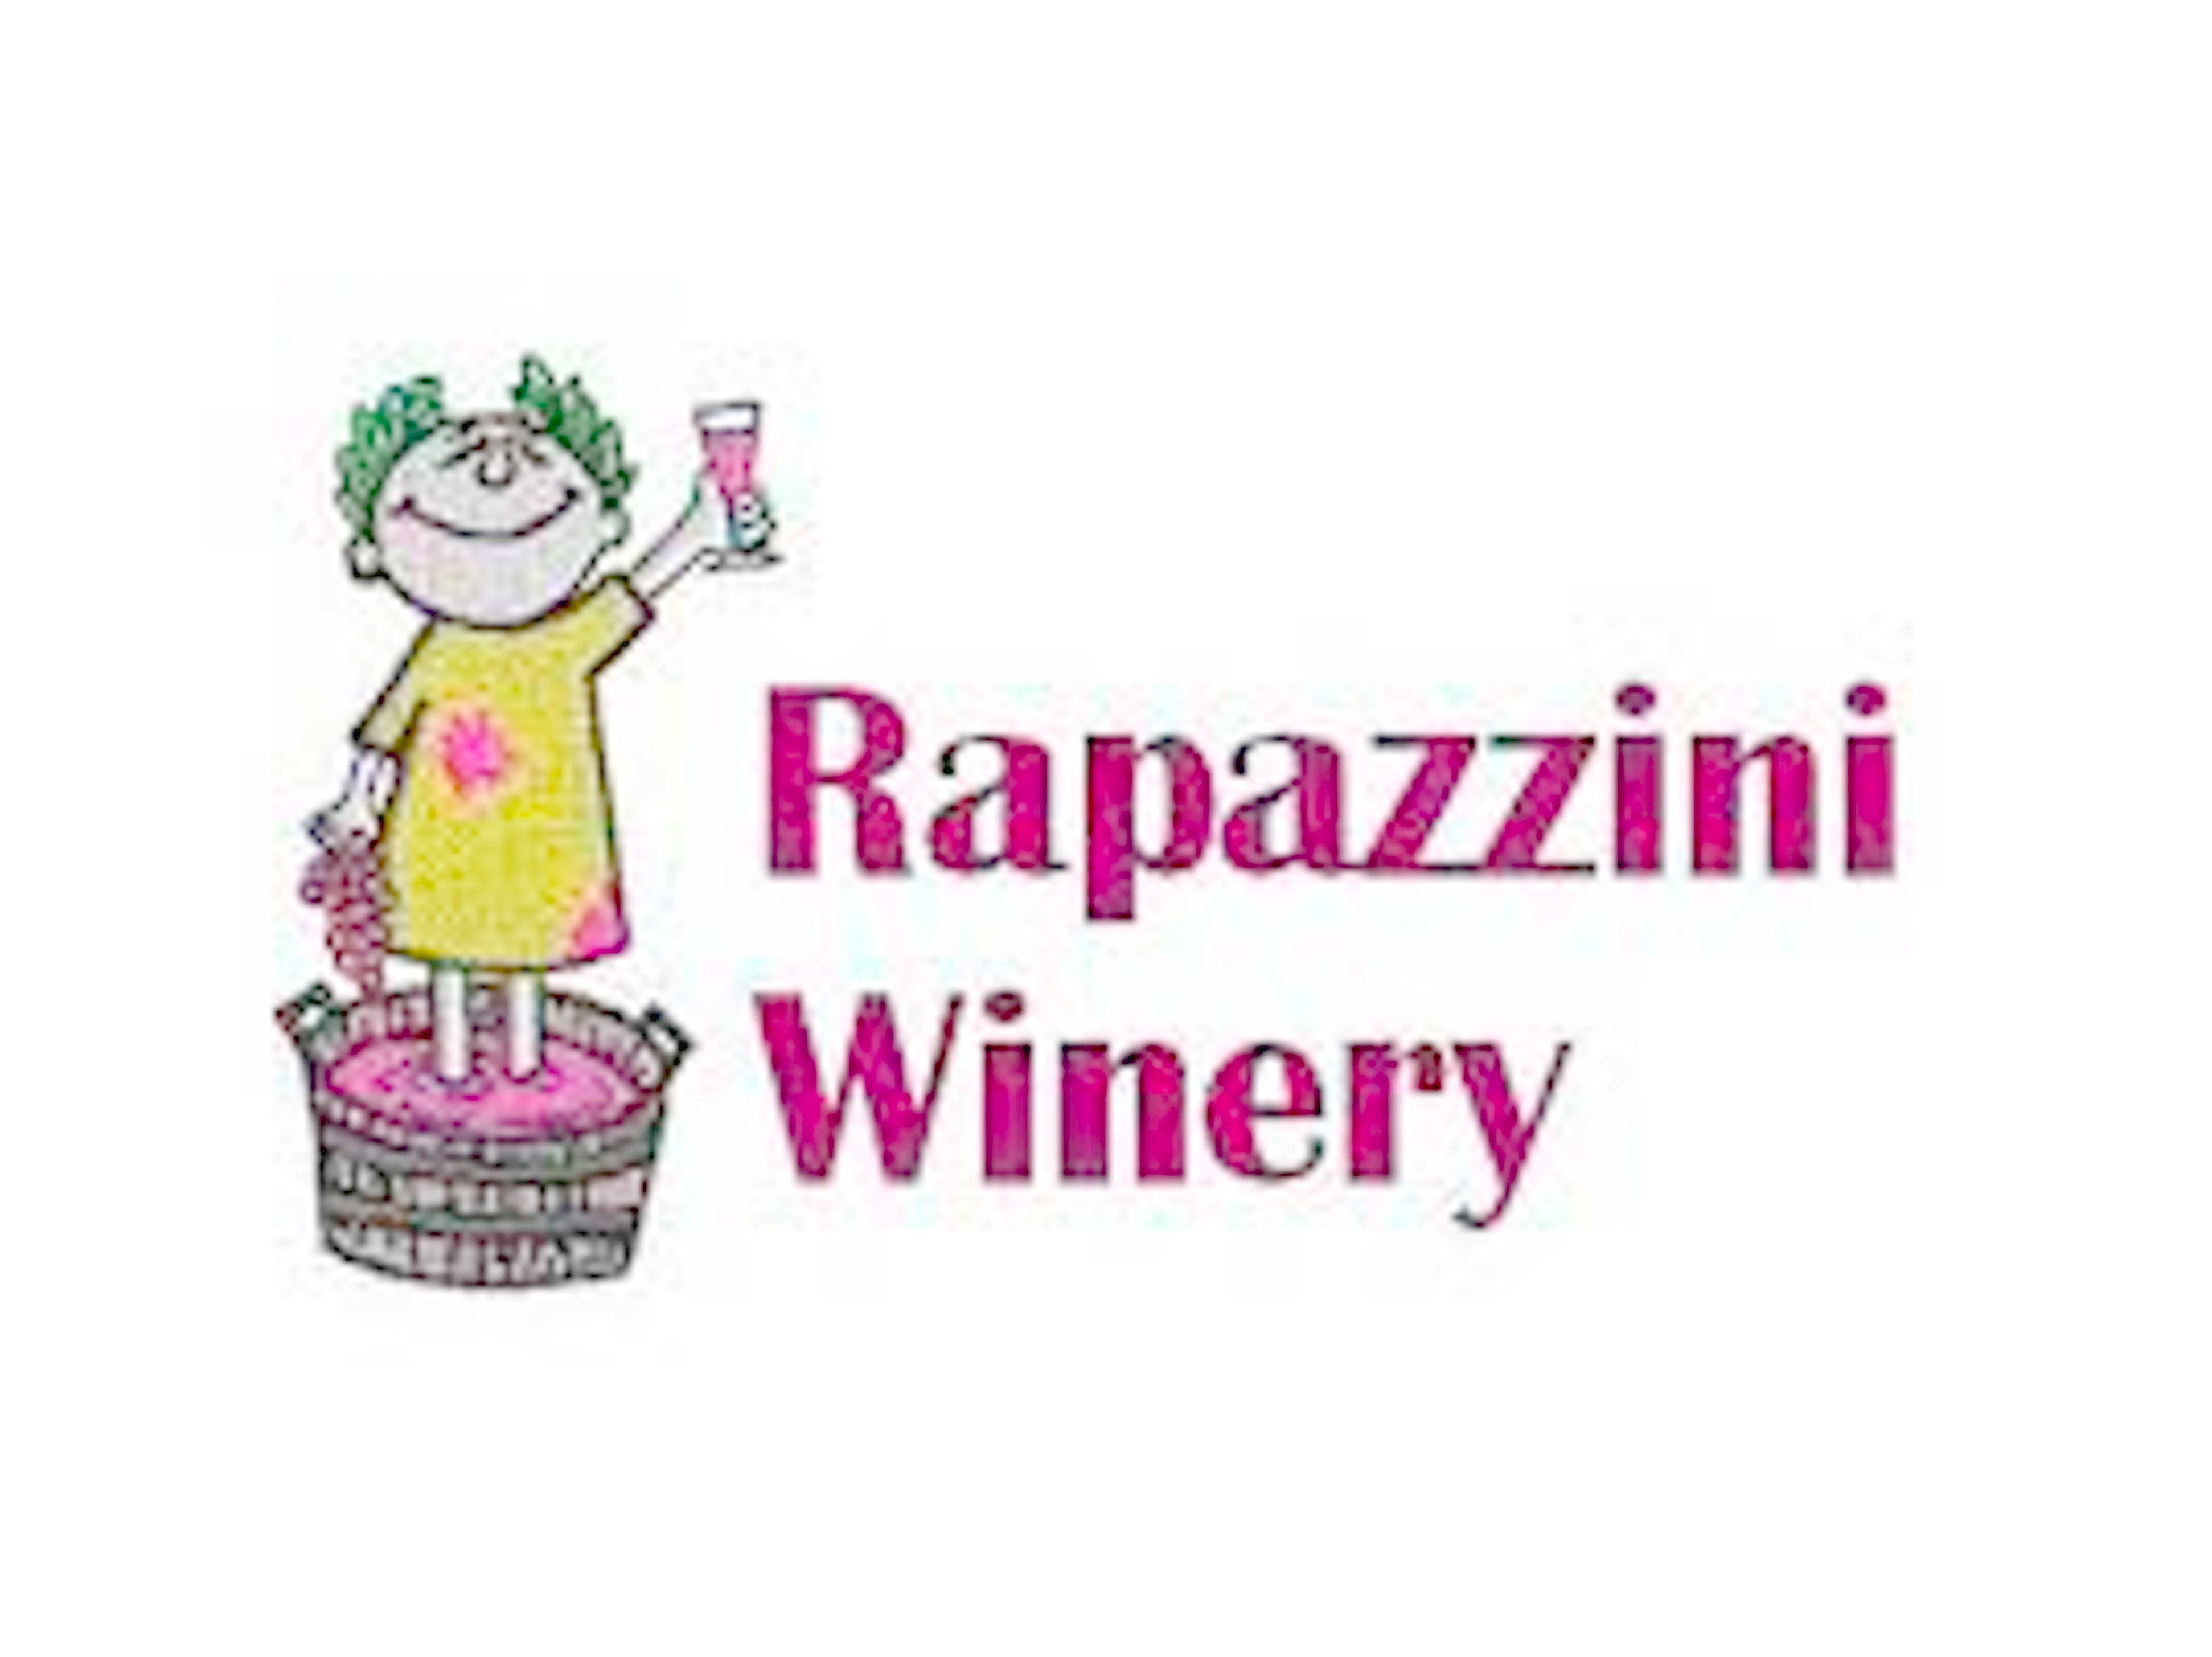 LOGO Wine Guy Rapazzini Winery Name 